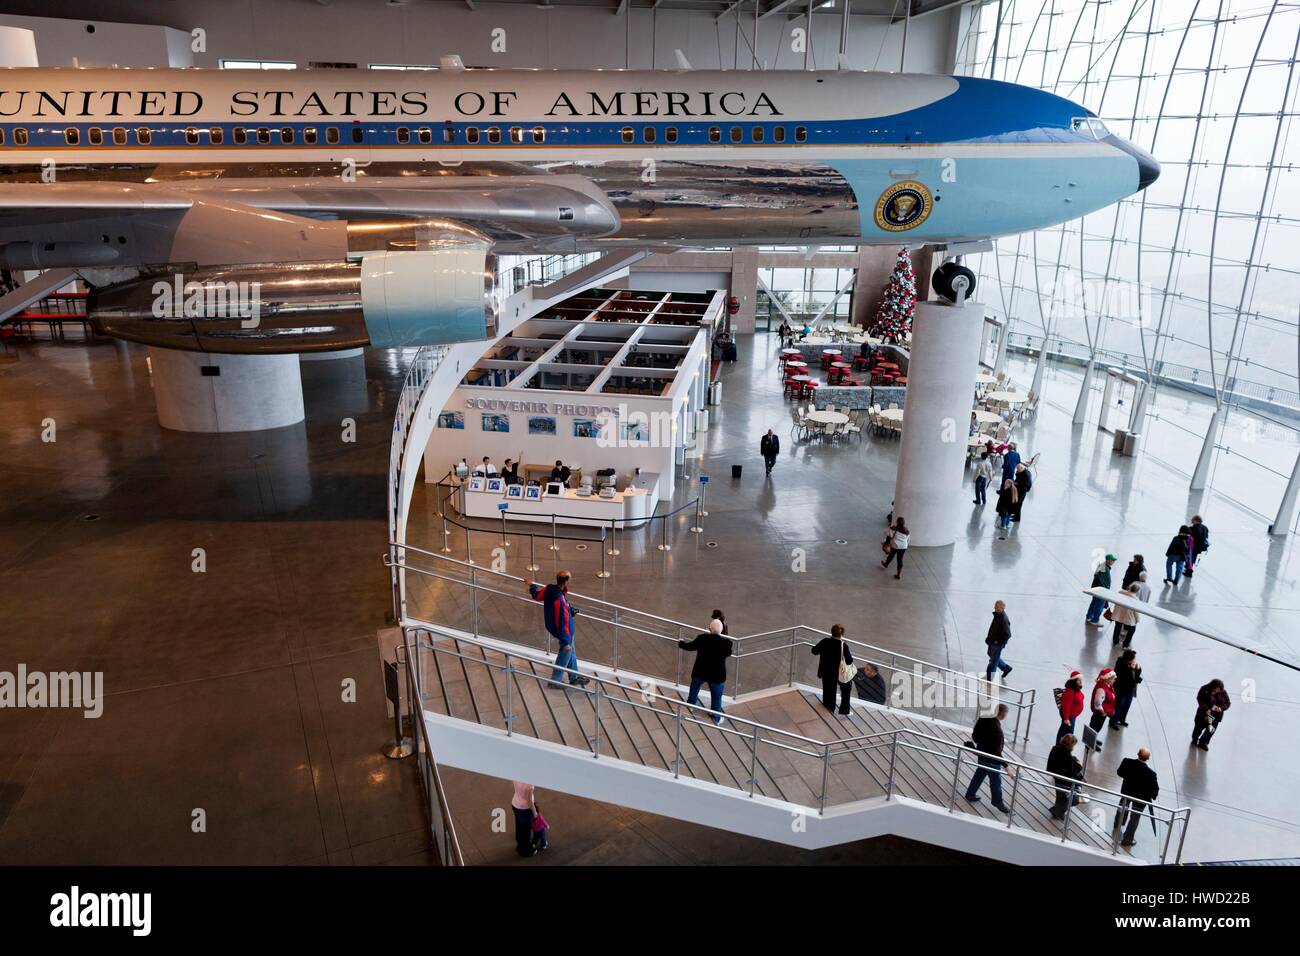 United States, California, Southern California, Simi Valley, der Ronald Reagan Presidential Library, Ausstellung, die Boeing 707 Airforce One der Reagan Präsidentschaft Stockfoto